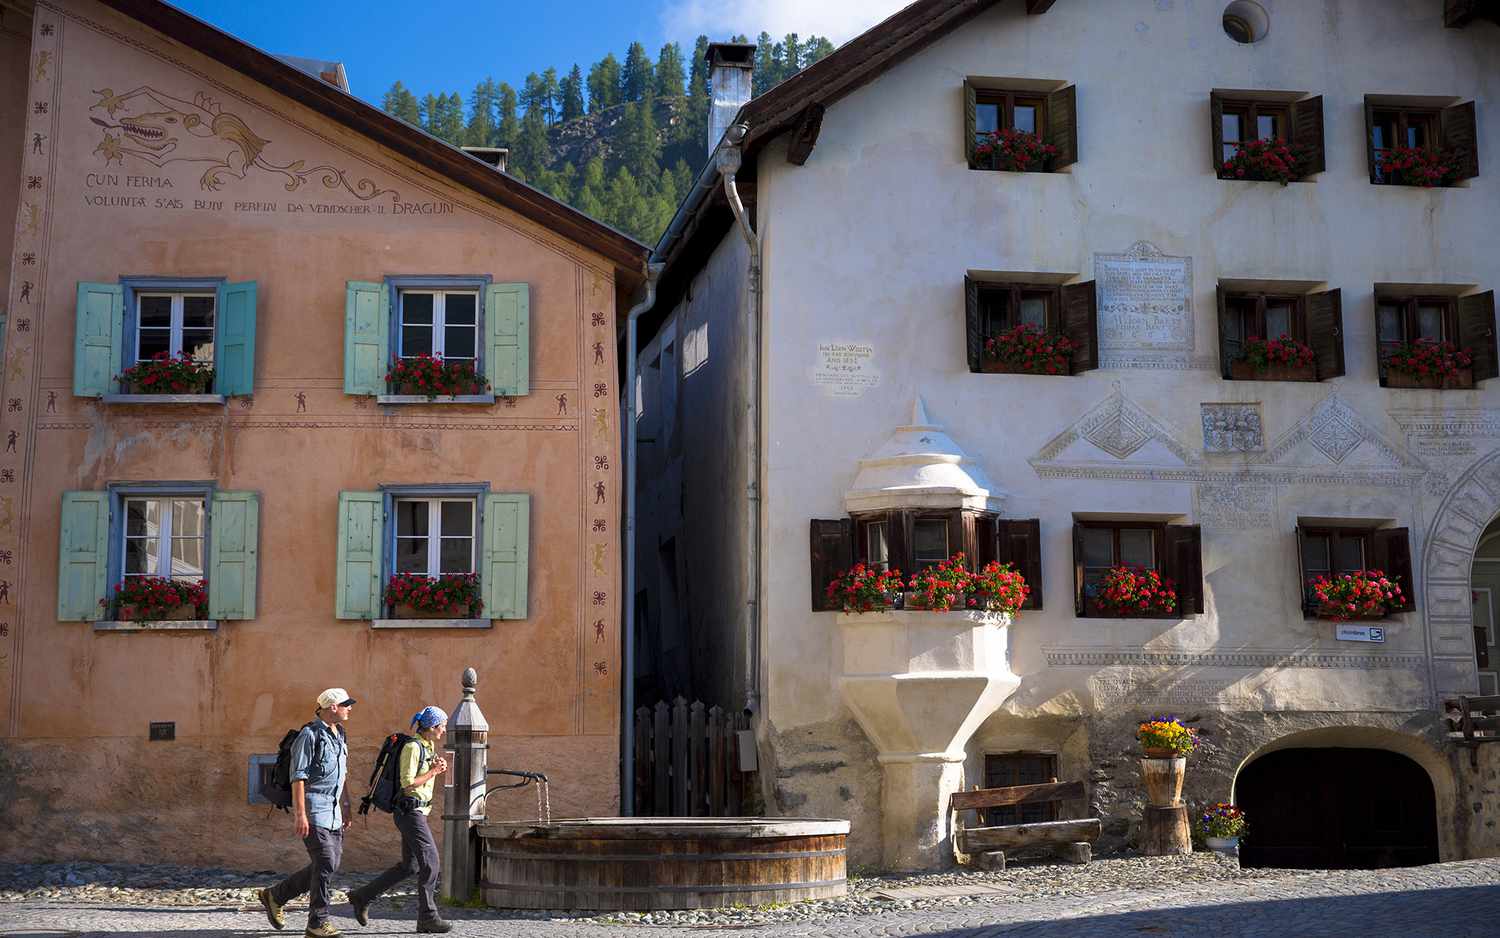 Europe's Most Beautiful Villages: Guarda, Switzerland